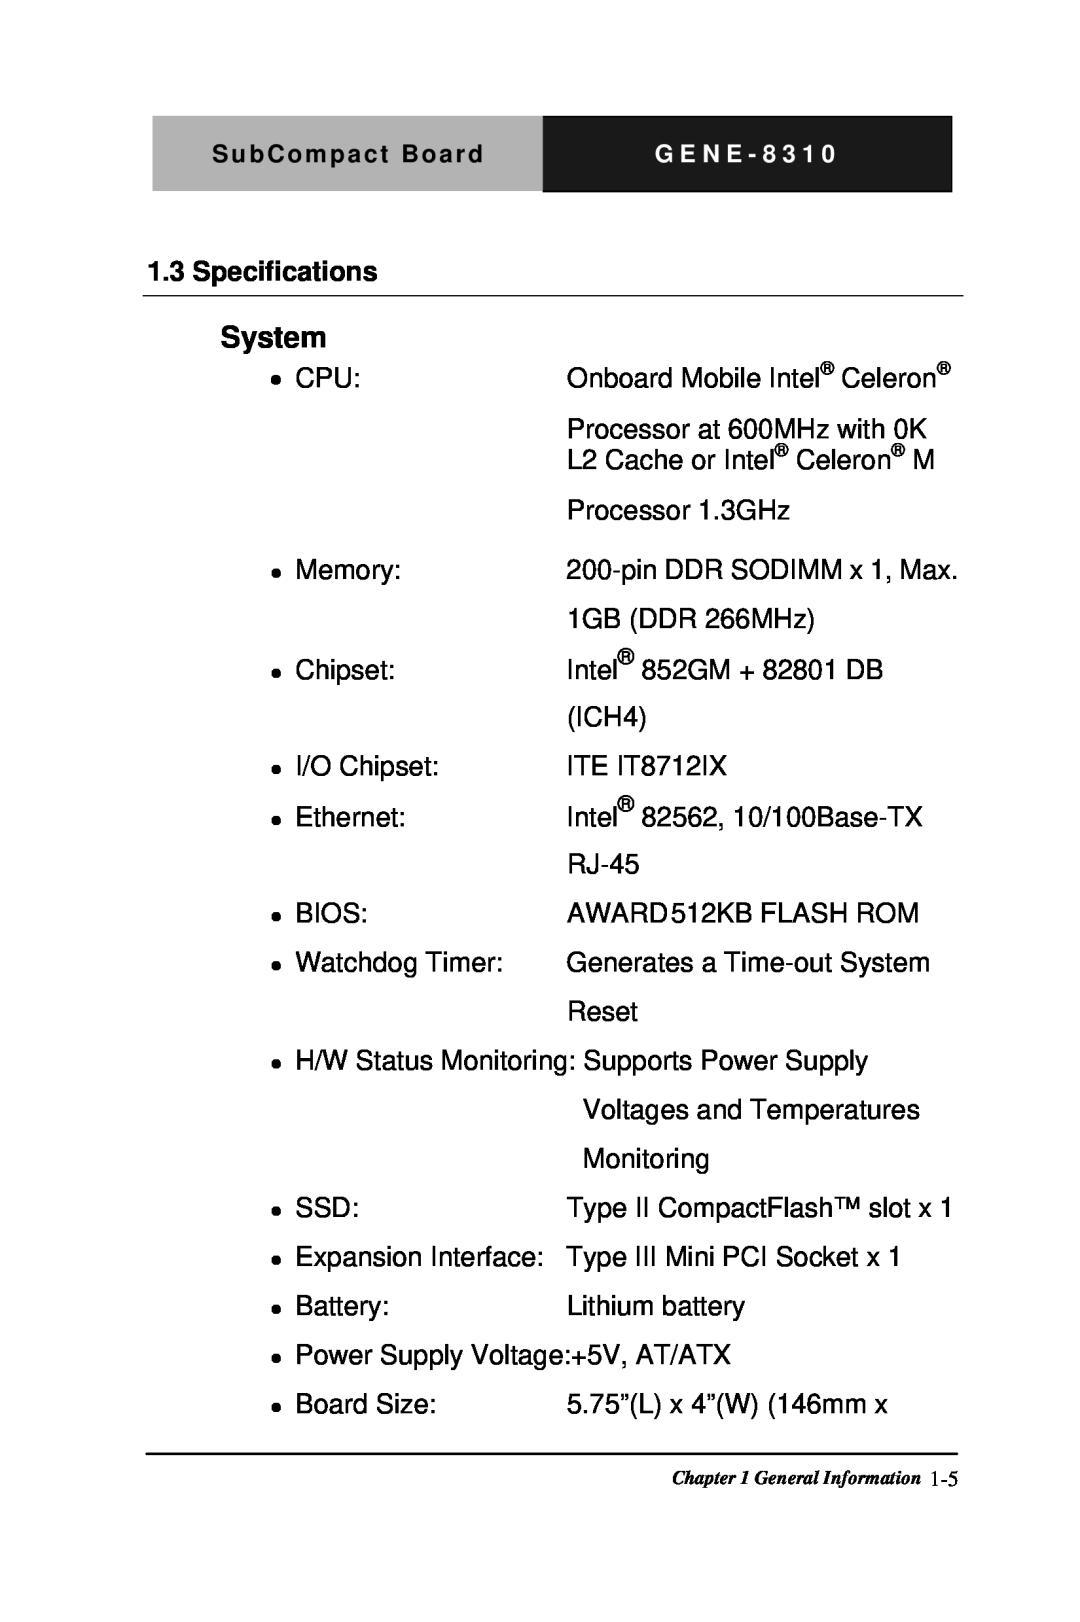 Intel GENE-8310 manual System, Specifications 